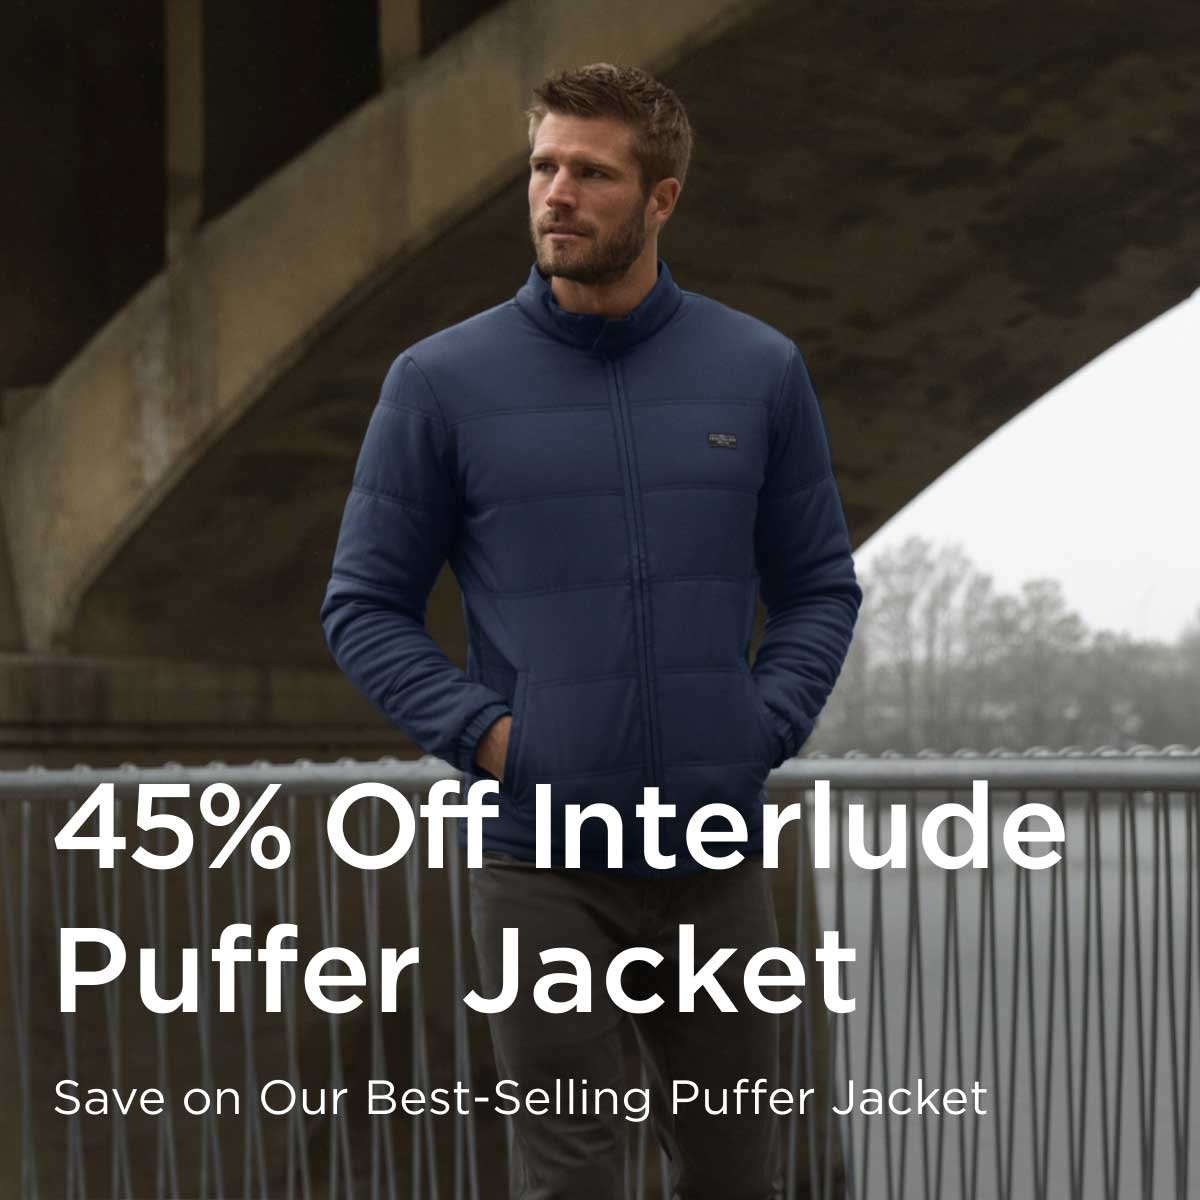 Interlude Puffer Jacket